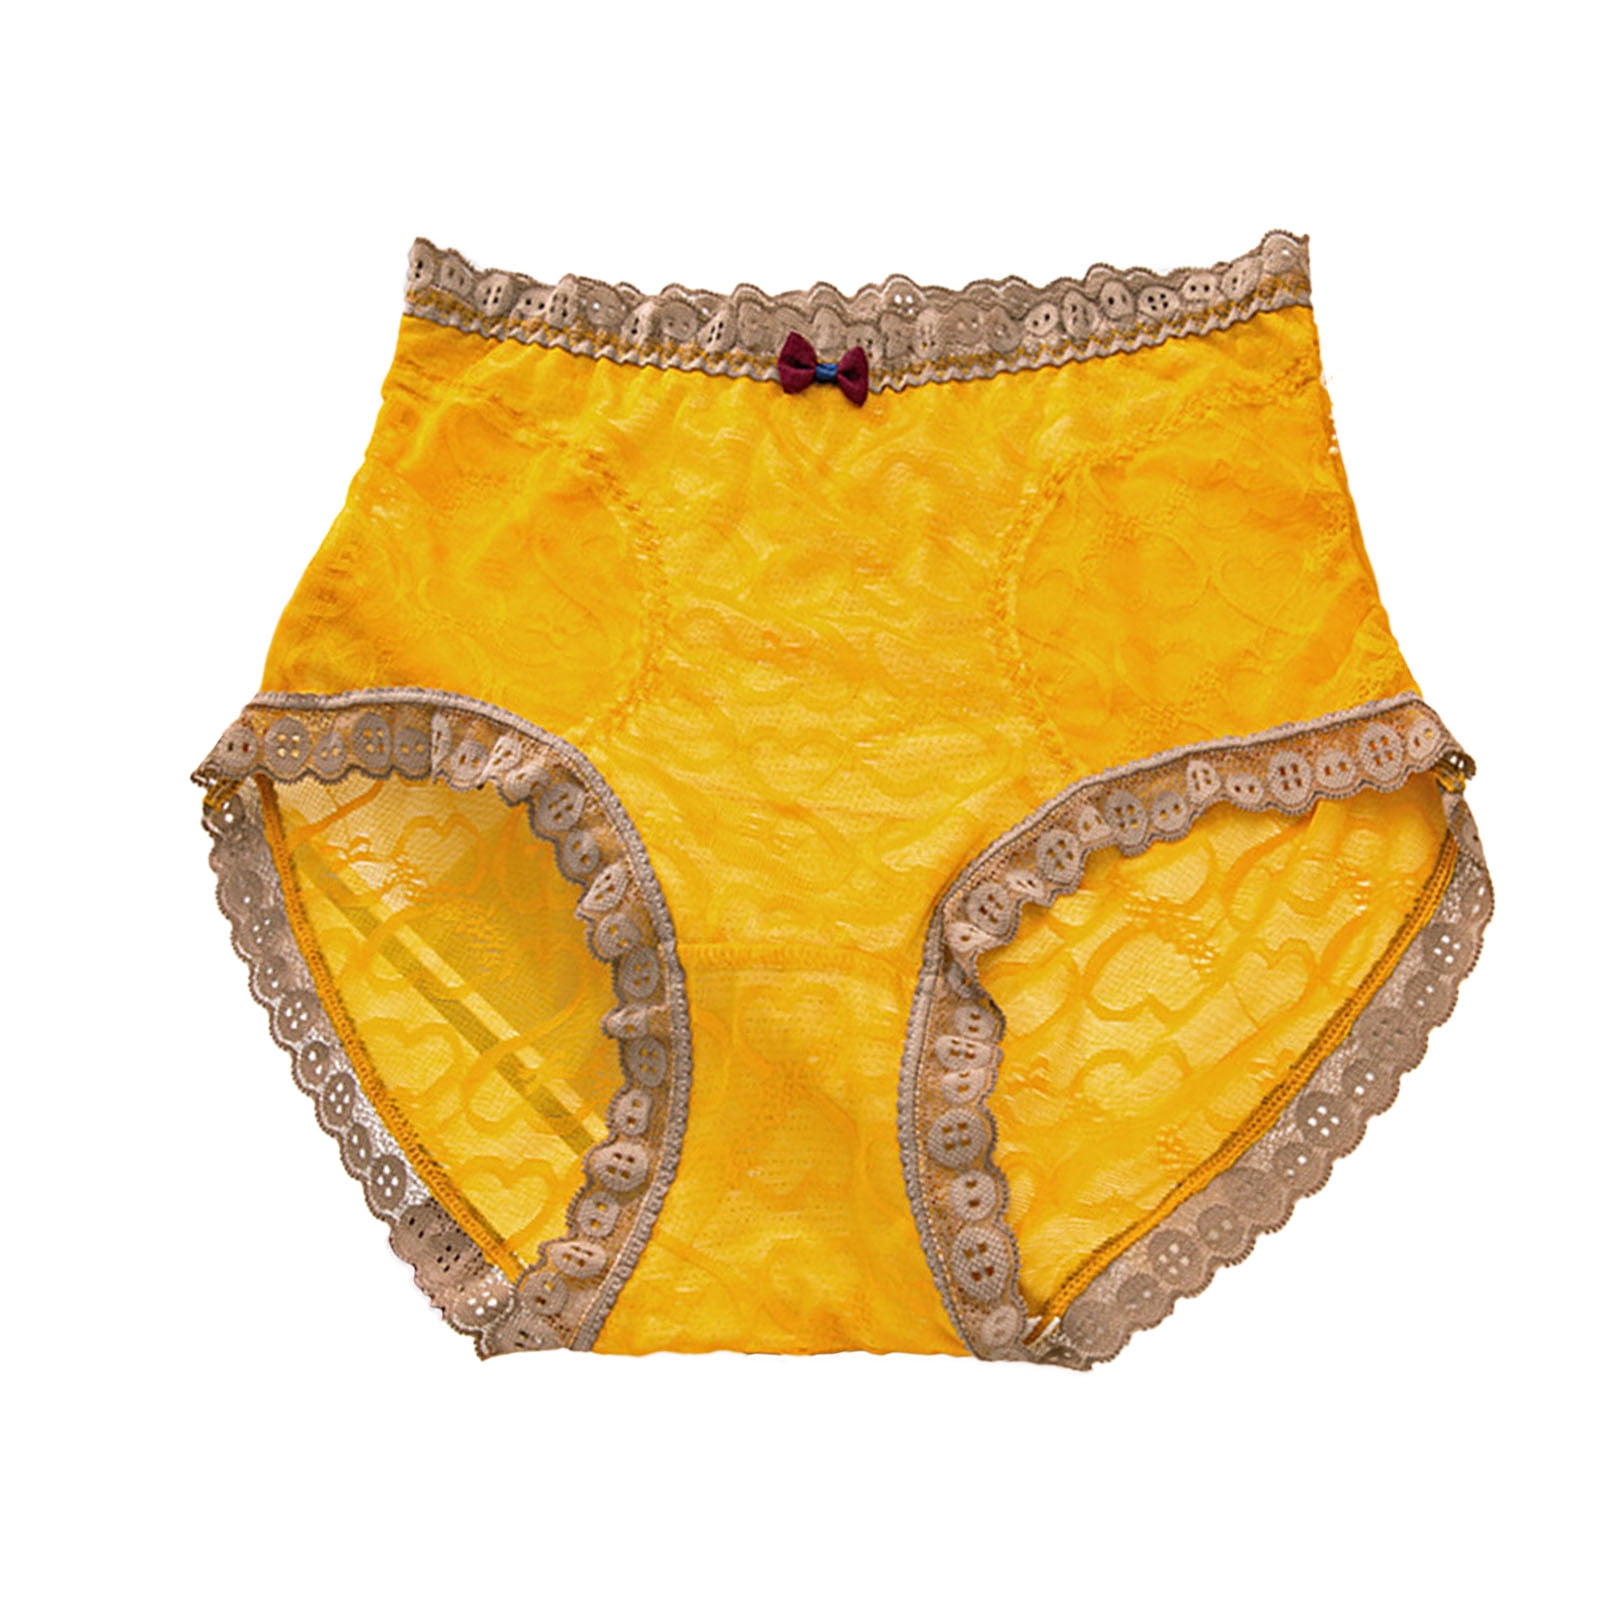 Rovga Panties For Women Female Lace High Waist Abdominal Colorblock Lace  Trim Briefs Underpants